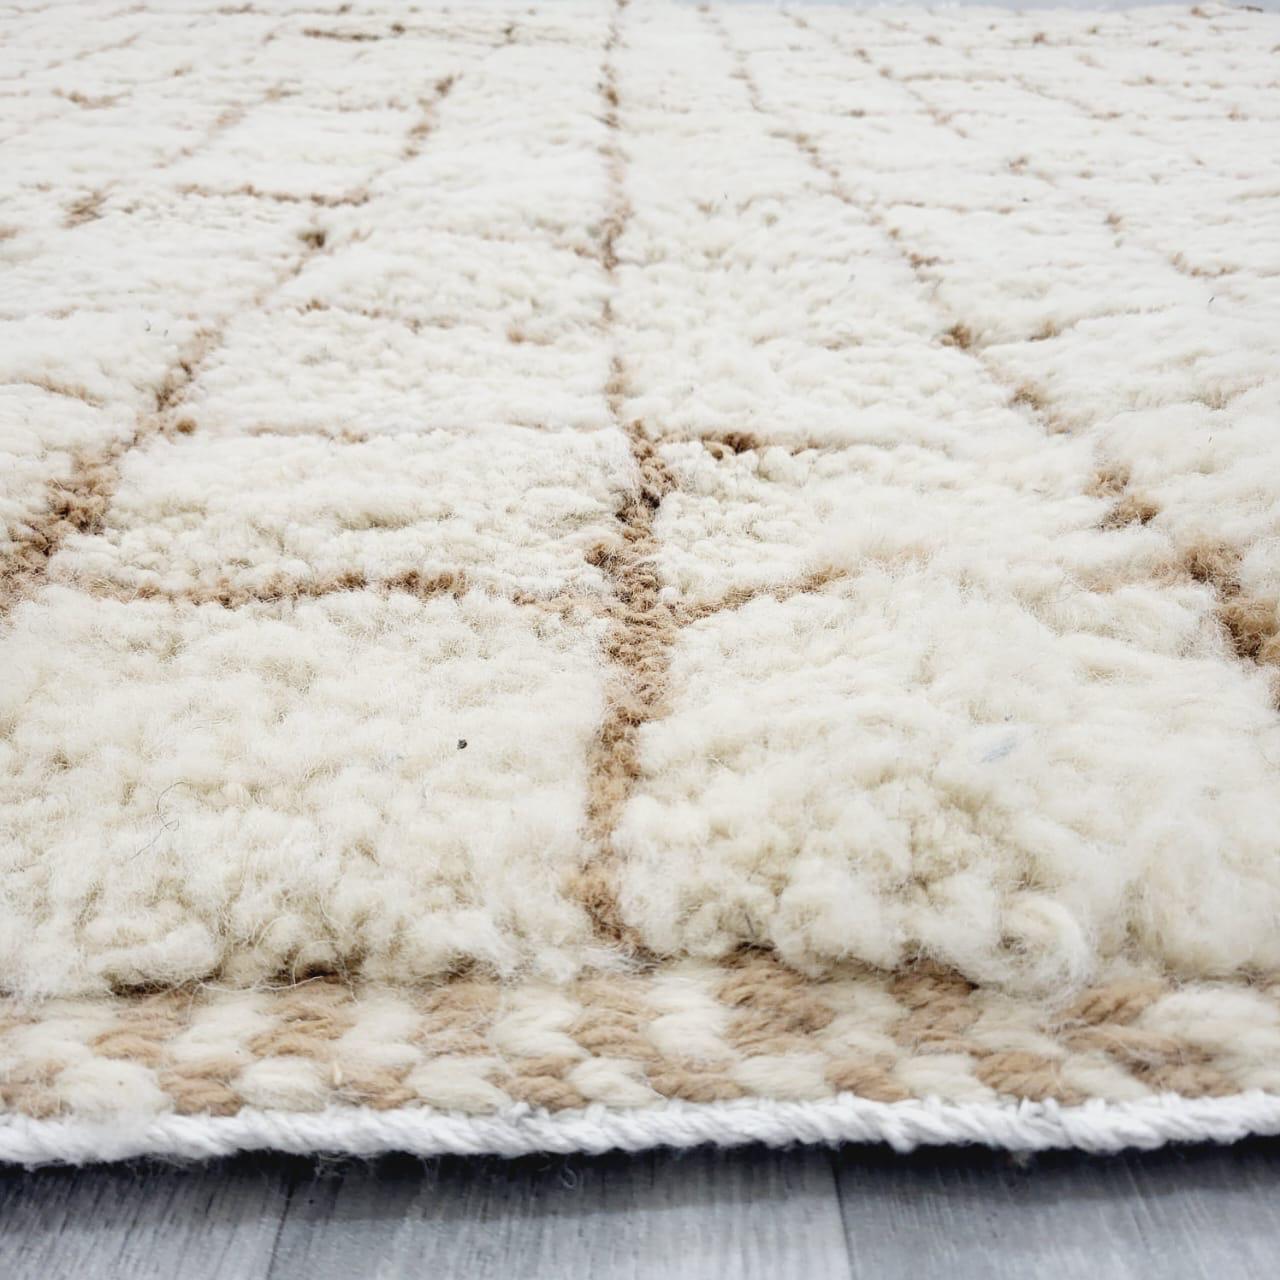 Moroccan Wool Rugs Bespoke Creations